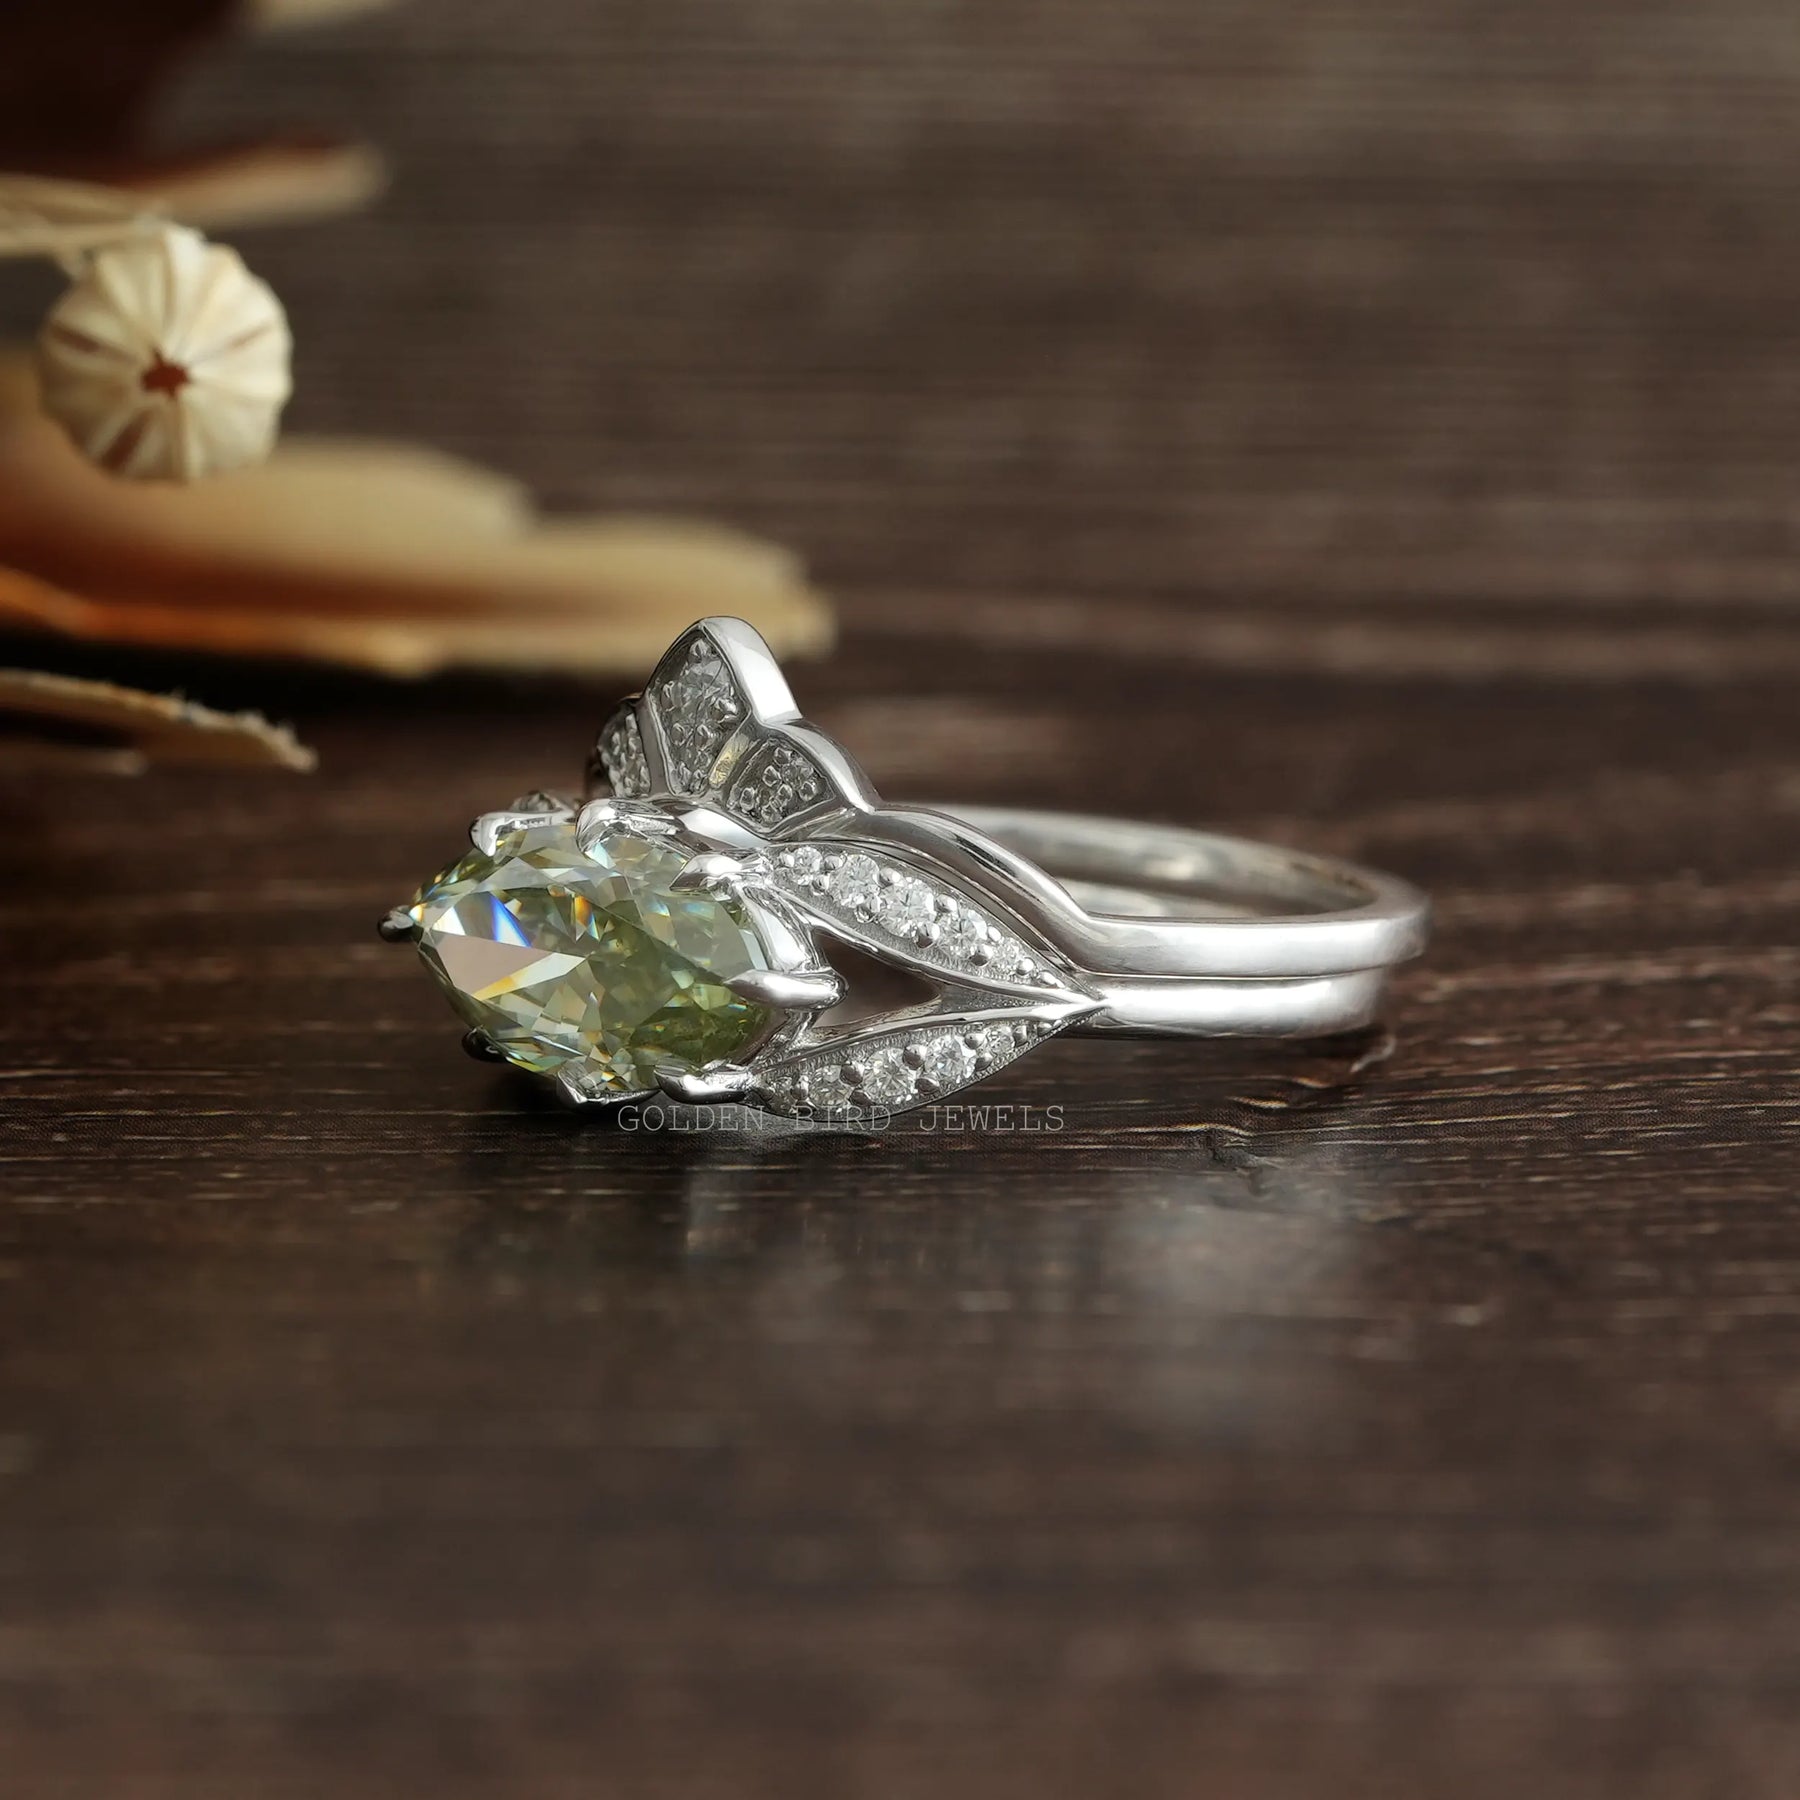 [Marquise Moissanite Wedding Ring Set made Of 18k White Gold]-[Golden Bird Jewels]